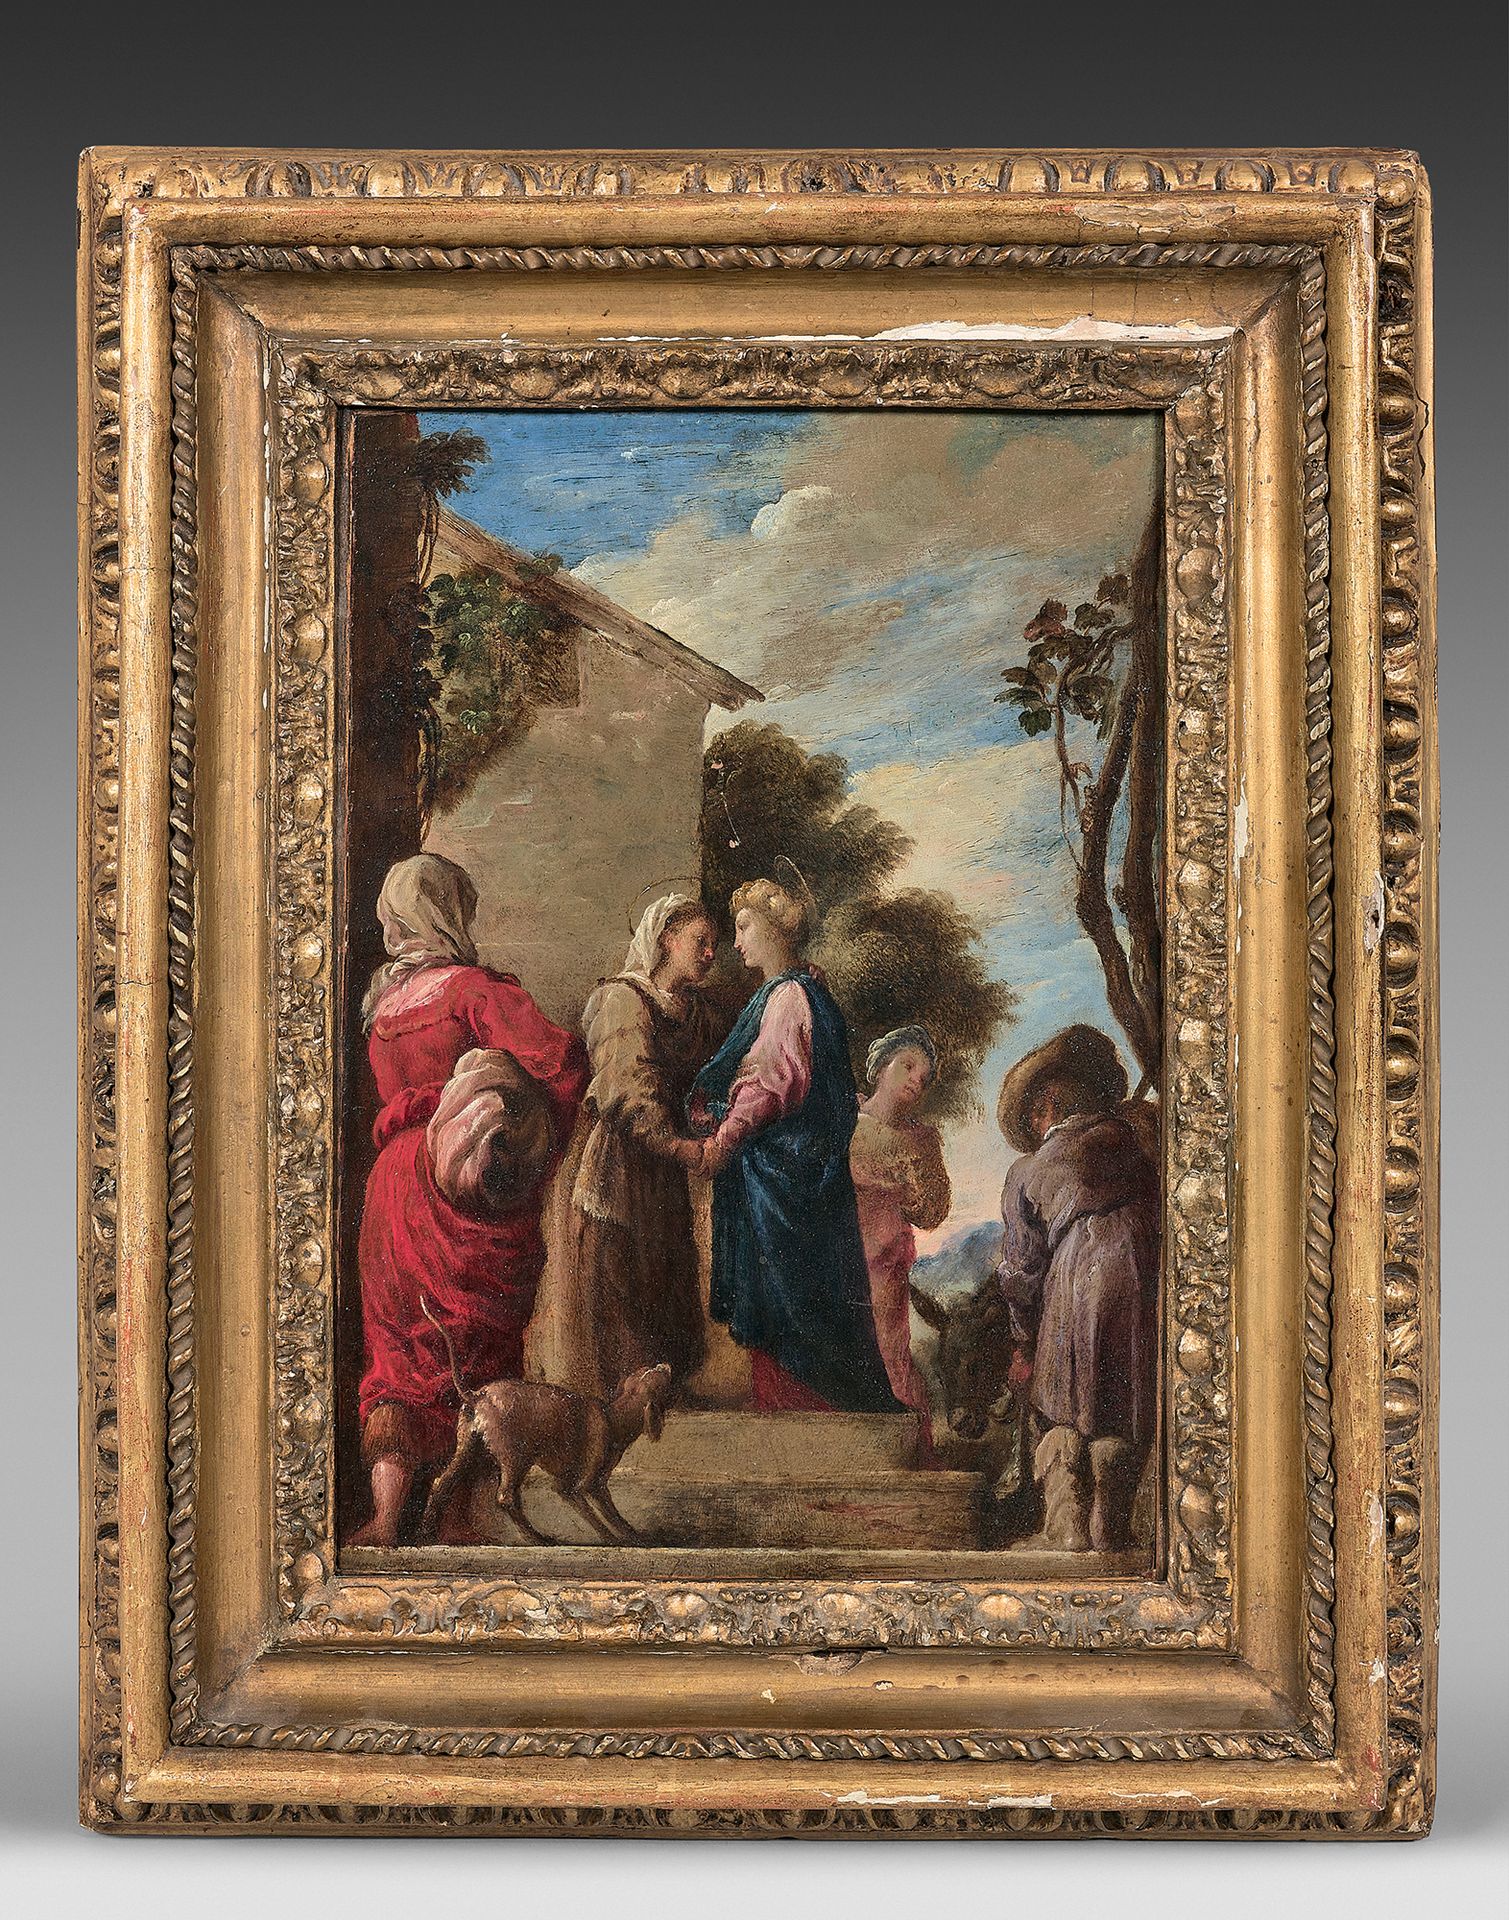 École ITALIENNE du XVIIe siècle, atelier de Domenico FETTI 探访
粘贴在面板上。
来自洛迪收藏的画作（&hellip;